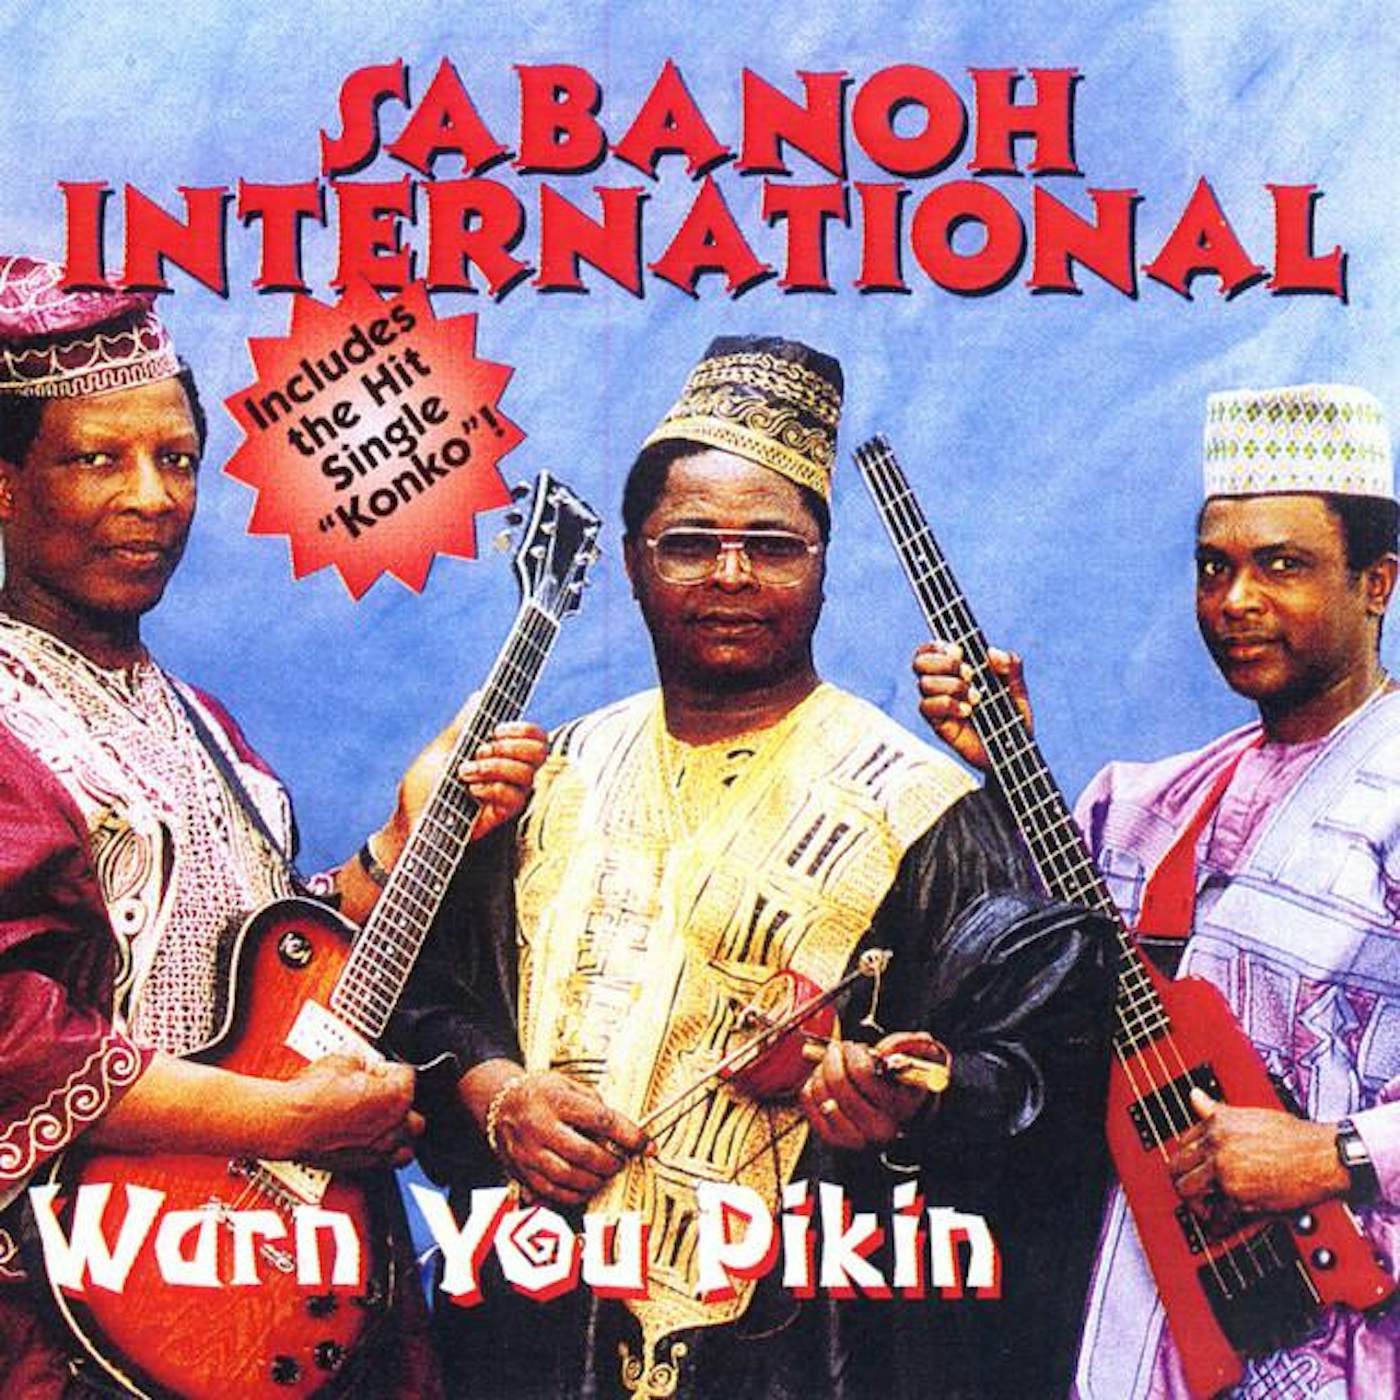 Sabanoh International